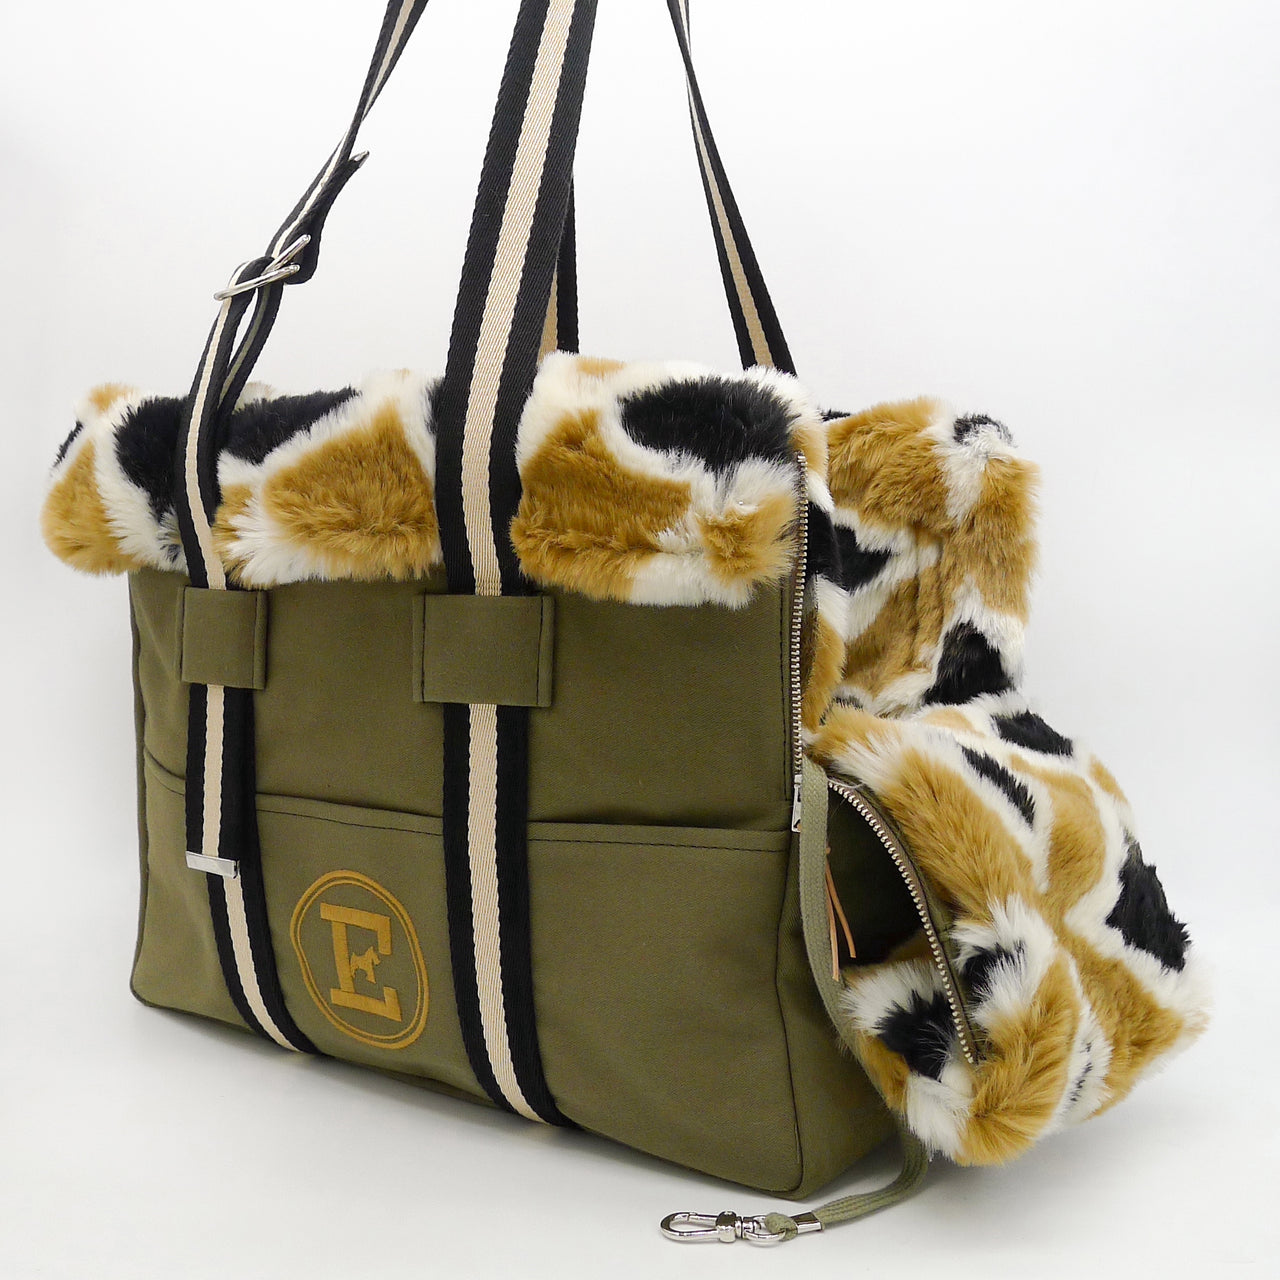 Dachshund Dog Carrier Bag Confortable